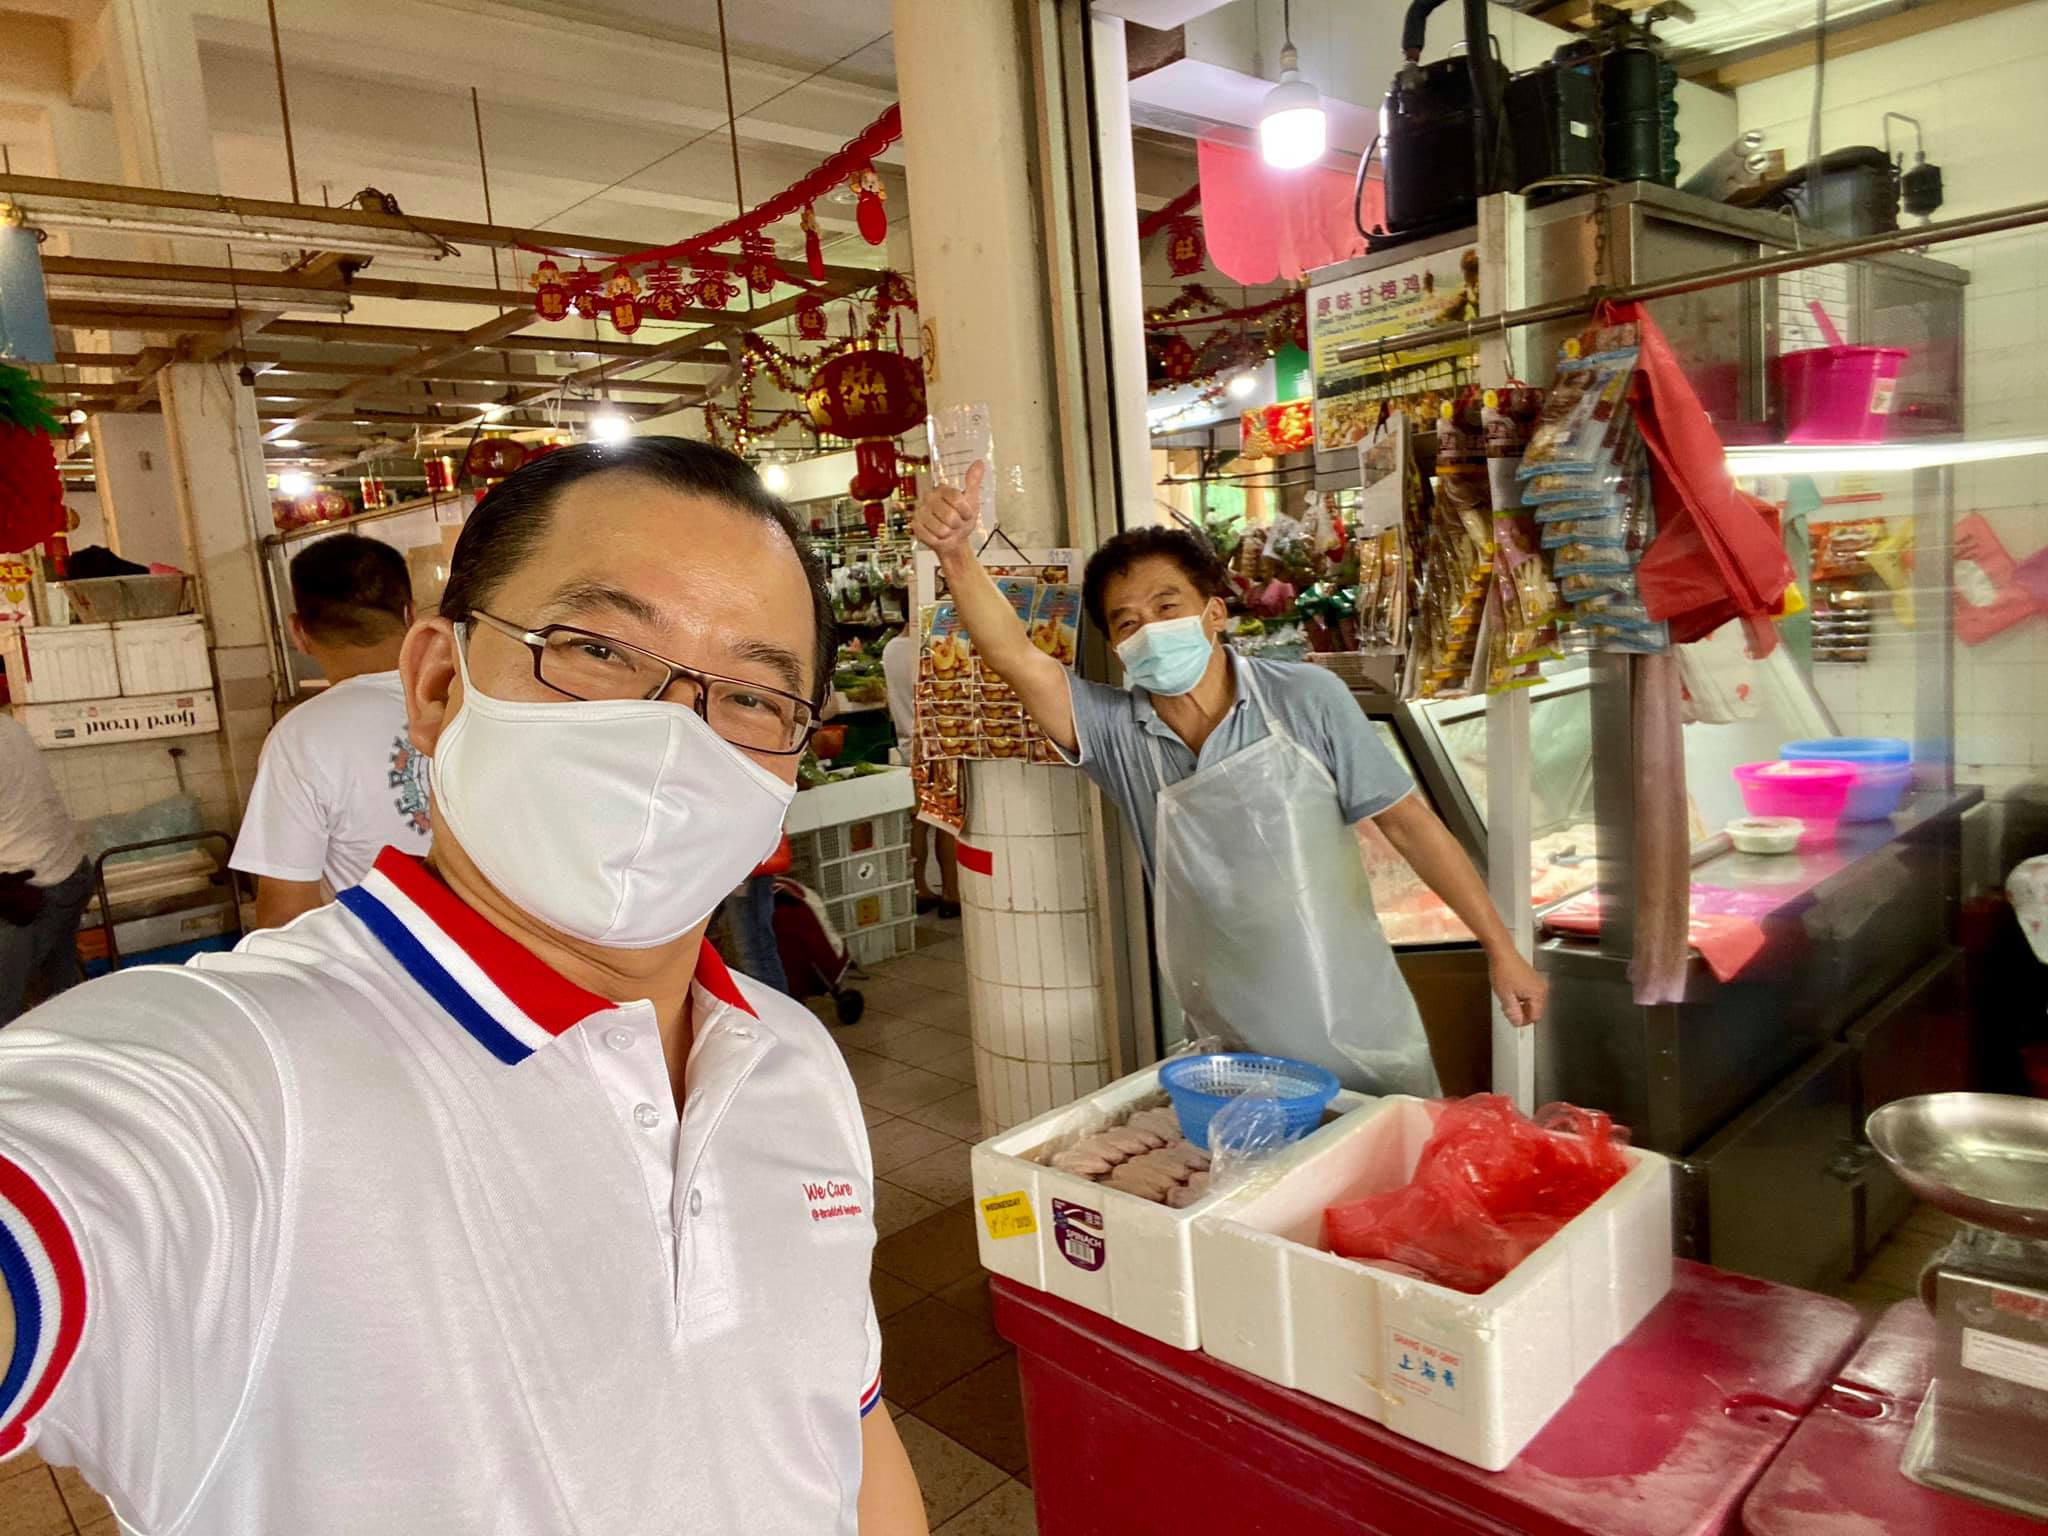 MP Seah Kian Peng poses for a wefie with a market vendor Sunday morning. Photo: Seah Kian Peng/Facebook